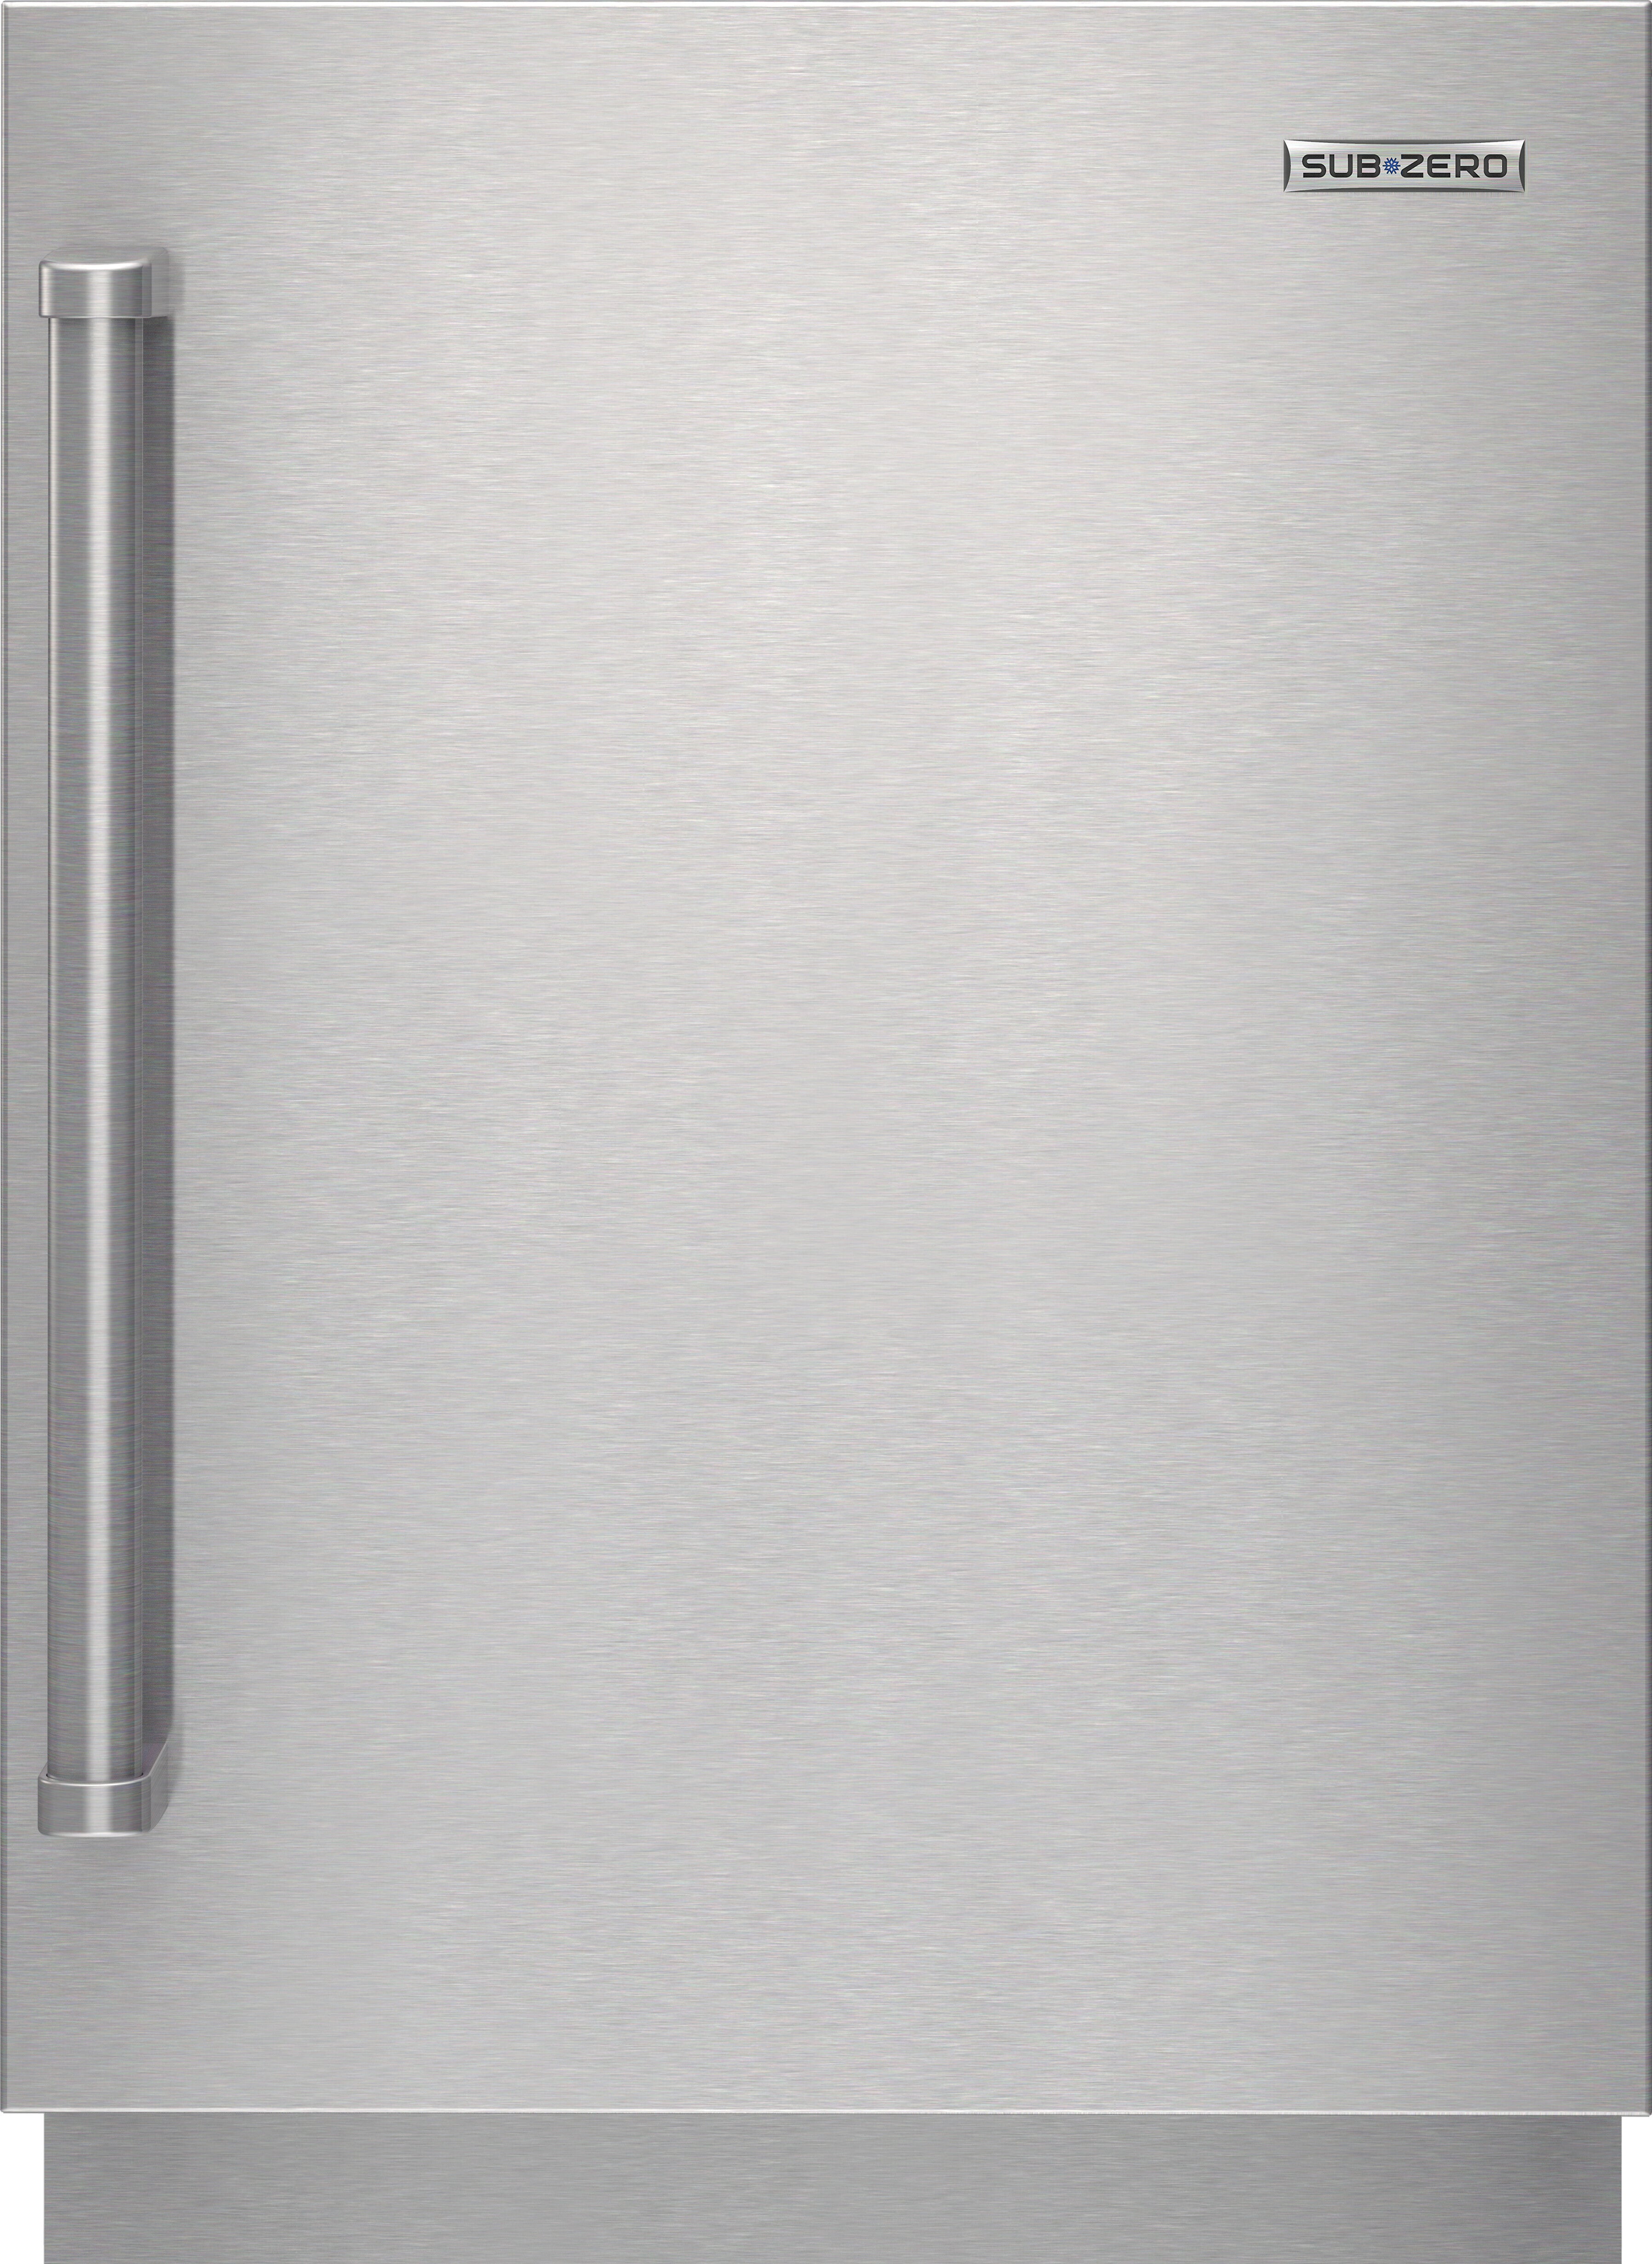 Sub-Zero - 24 Inch 5.4 cu. ft Built In / Integrated Outdoor Undercounter Refrigerator in Panel Ready - DEU2450RO/R